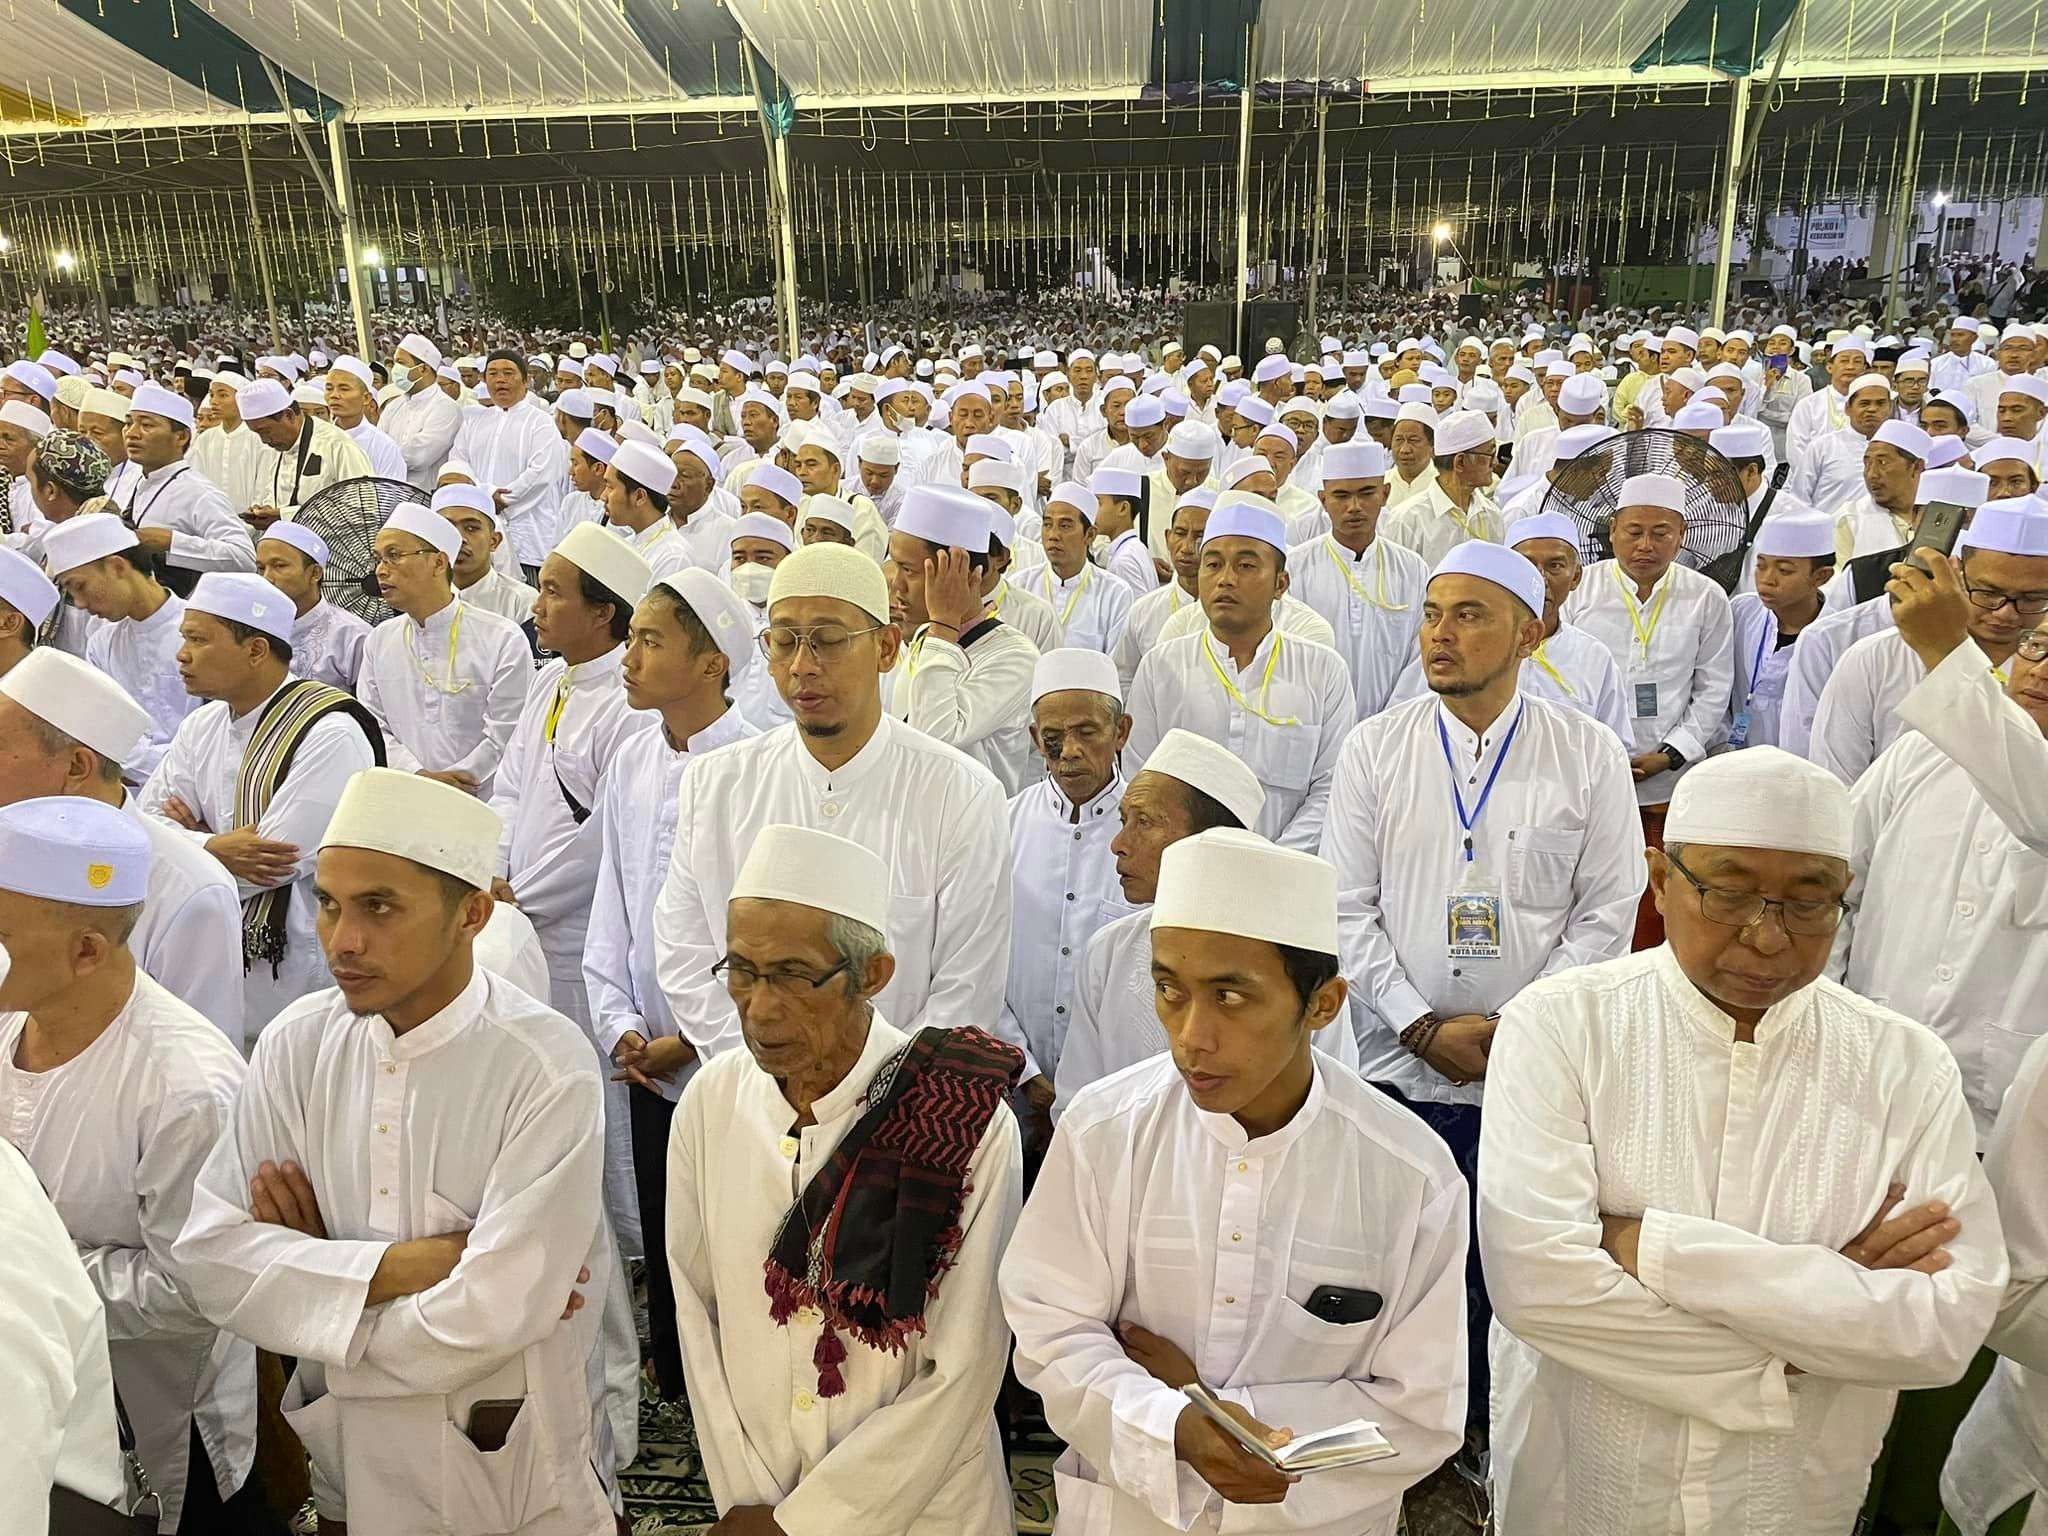 Dengan dikarunian sehat dan menjaga kesehatan, umat Islam makin kuat dalam beribadah. (Ilustrasi)